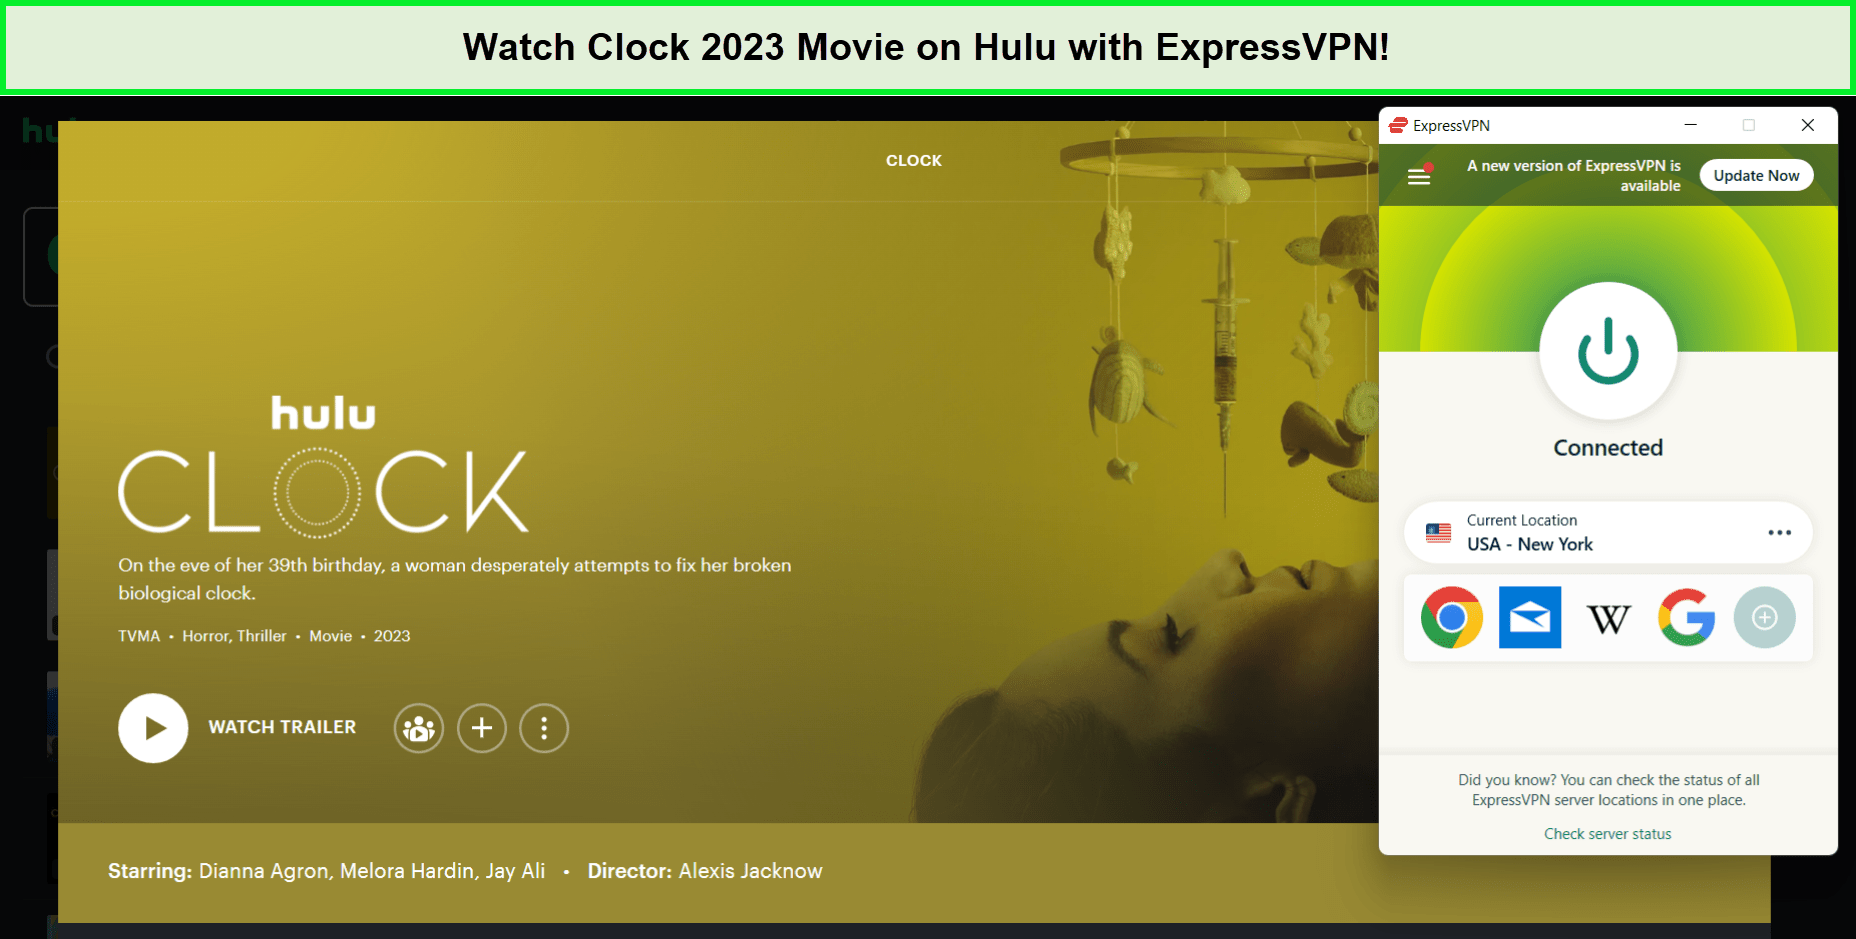 With-ExpressVPN-Watch-Clock-2023-Movie-on-Hulu-in-Japan